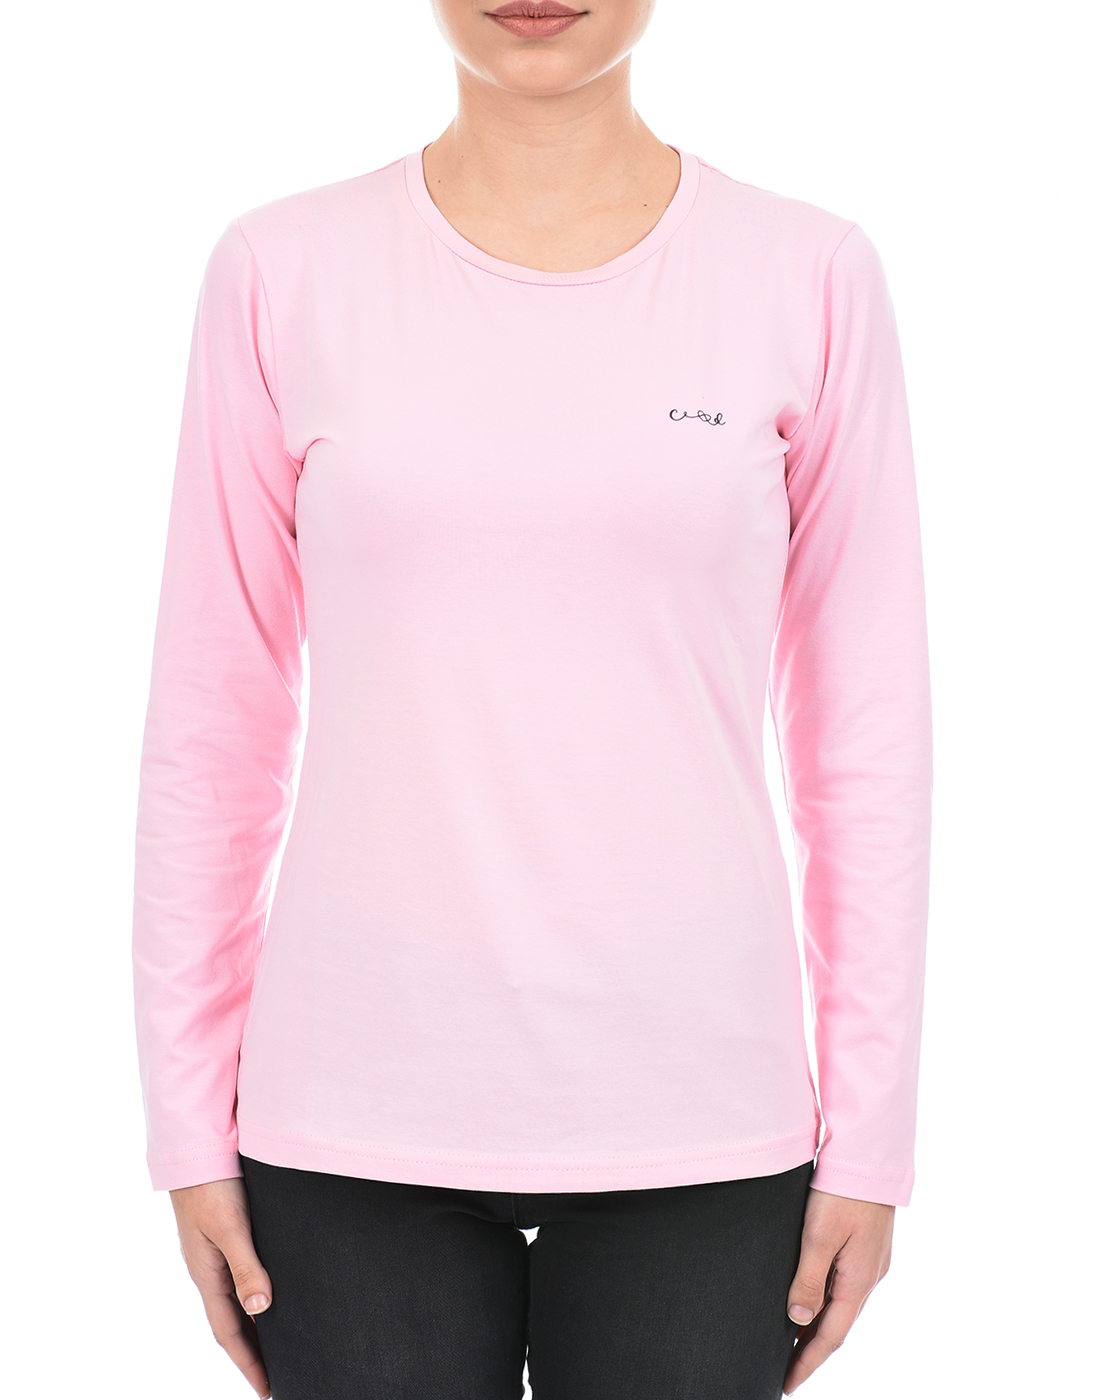 Cloak & Decker by Monte Carlo Women Solid Pink T-Shirt